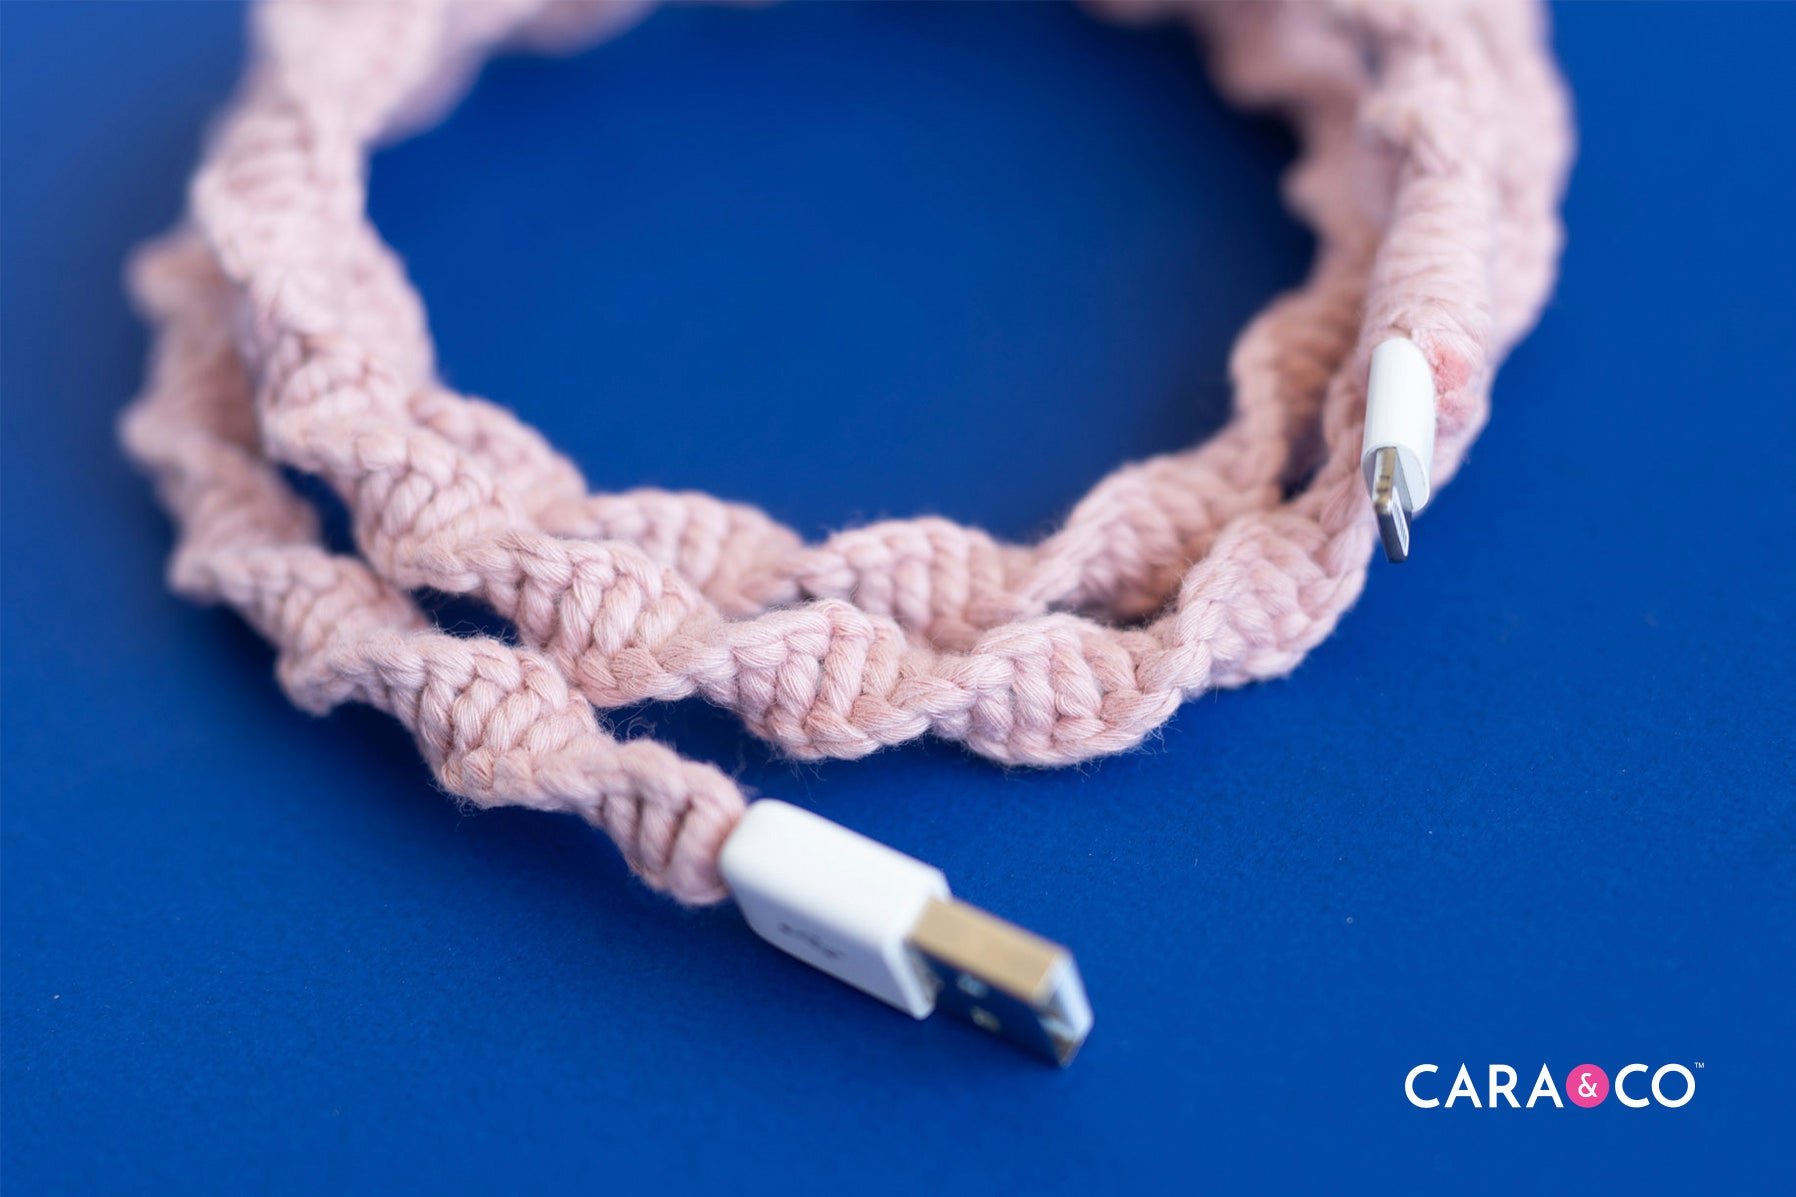 DIY Macrame phone charging cord - Cara & Co